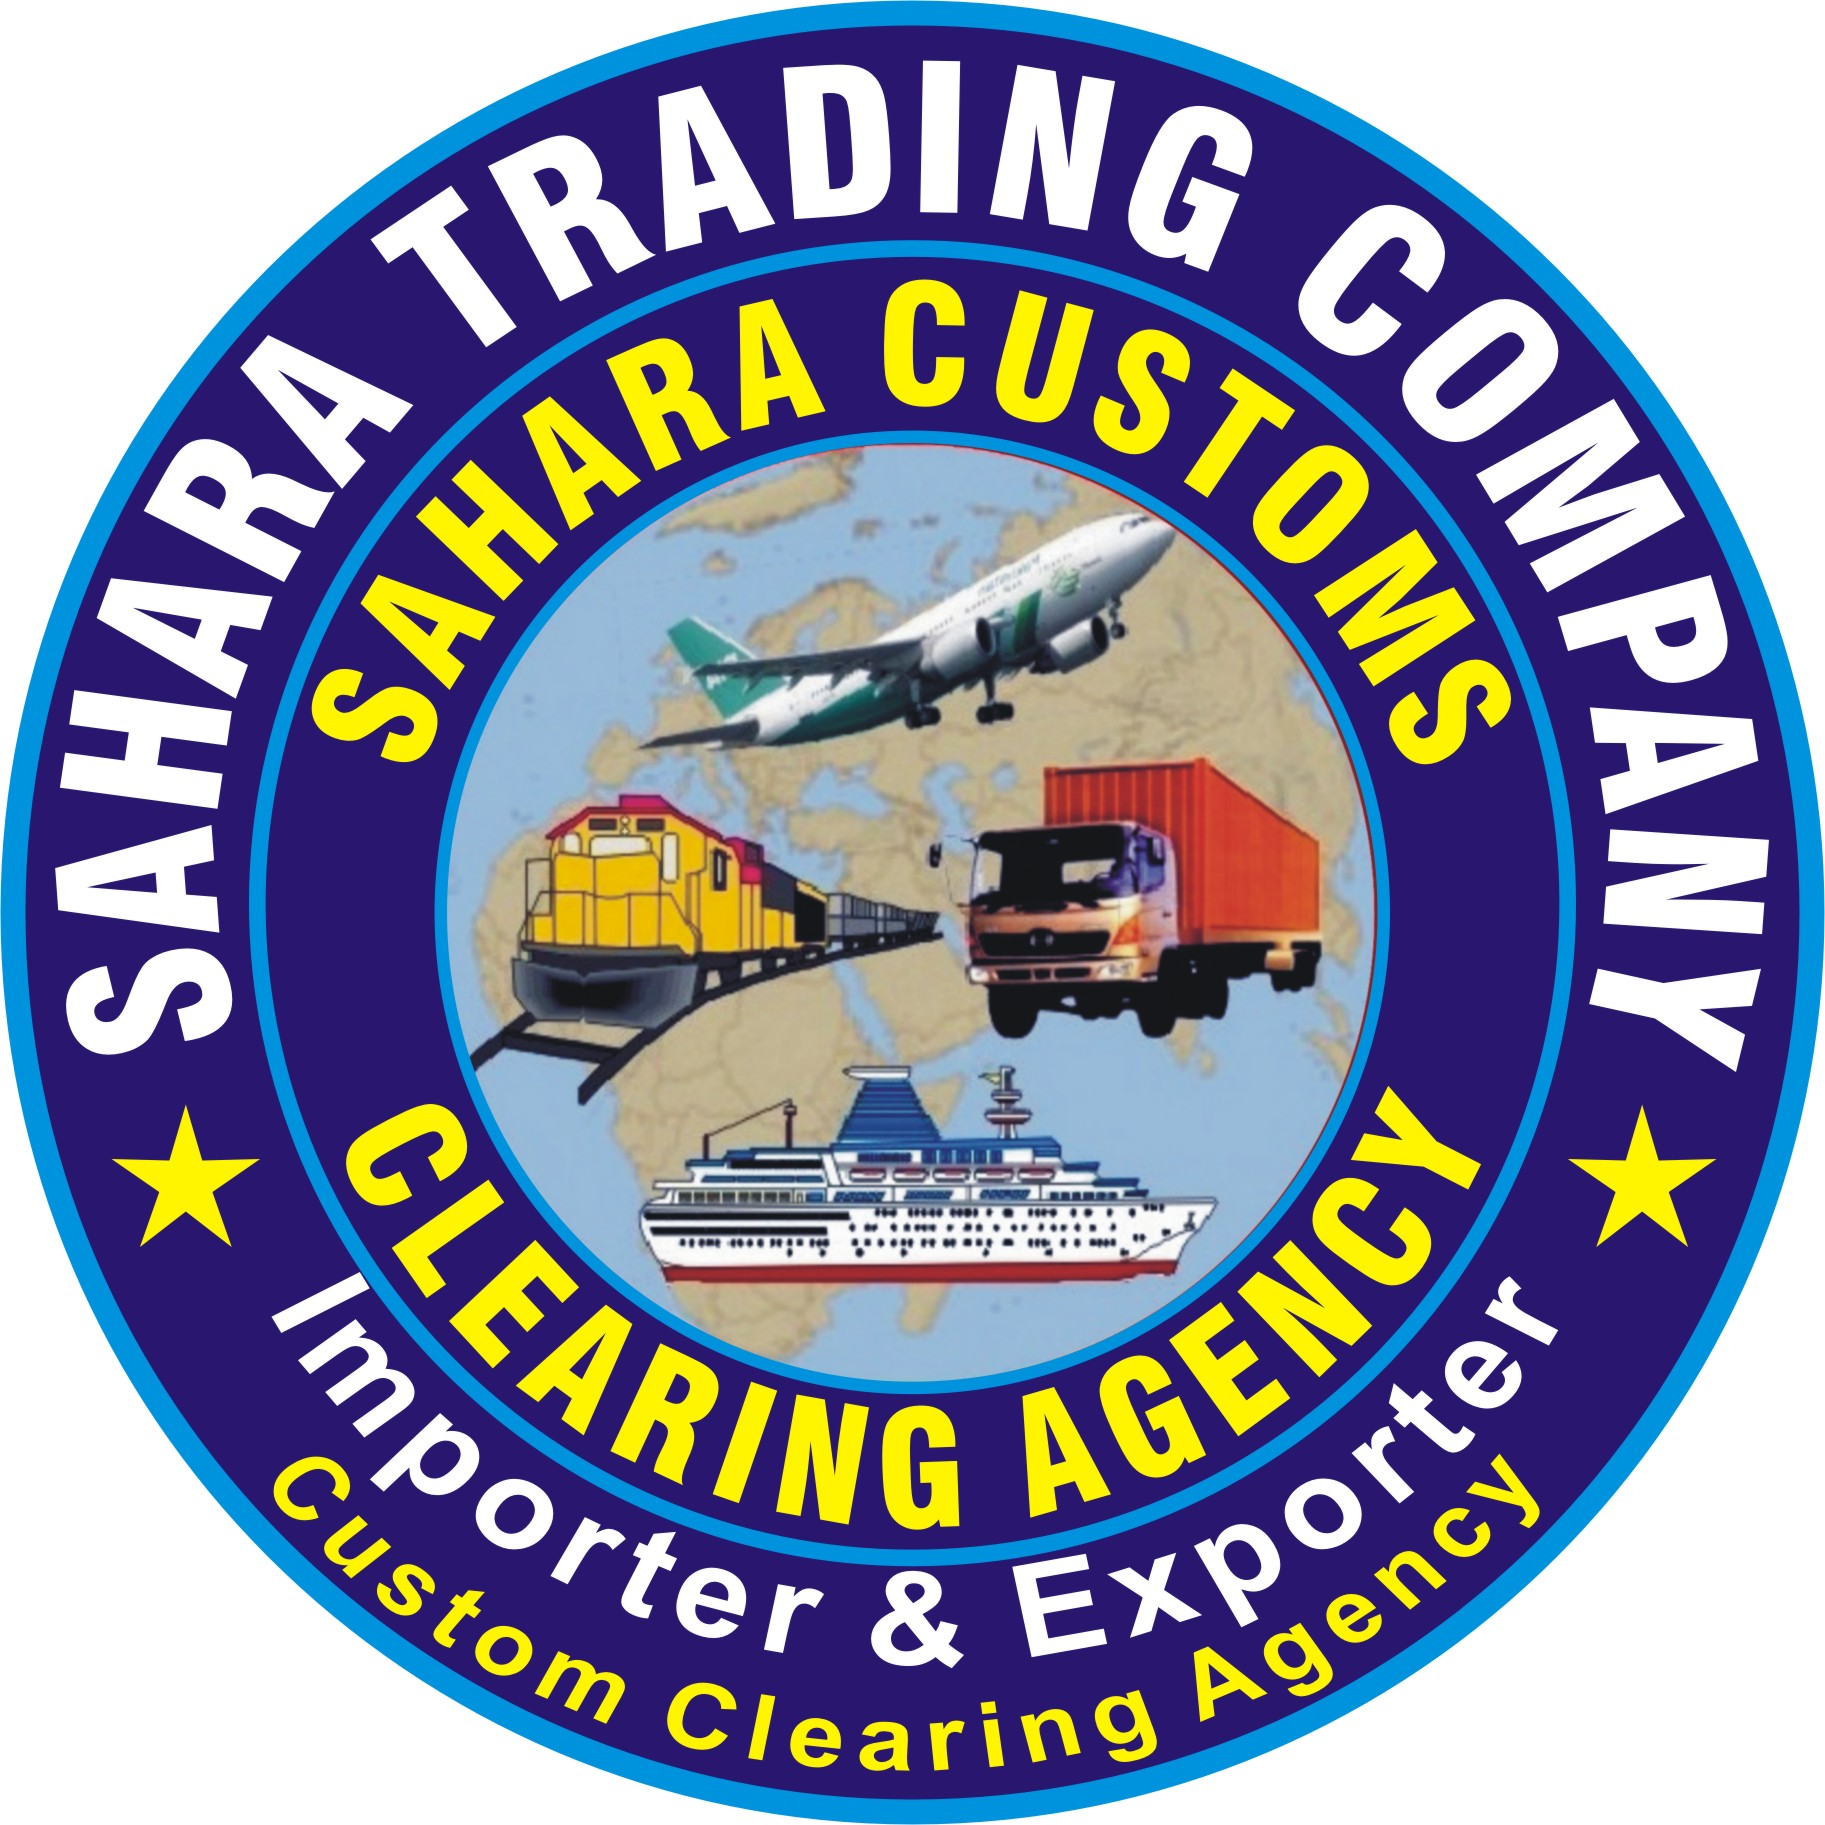 SAHARA CUSTOMS CLEARING AGENCY